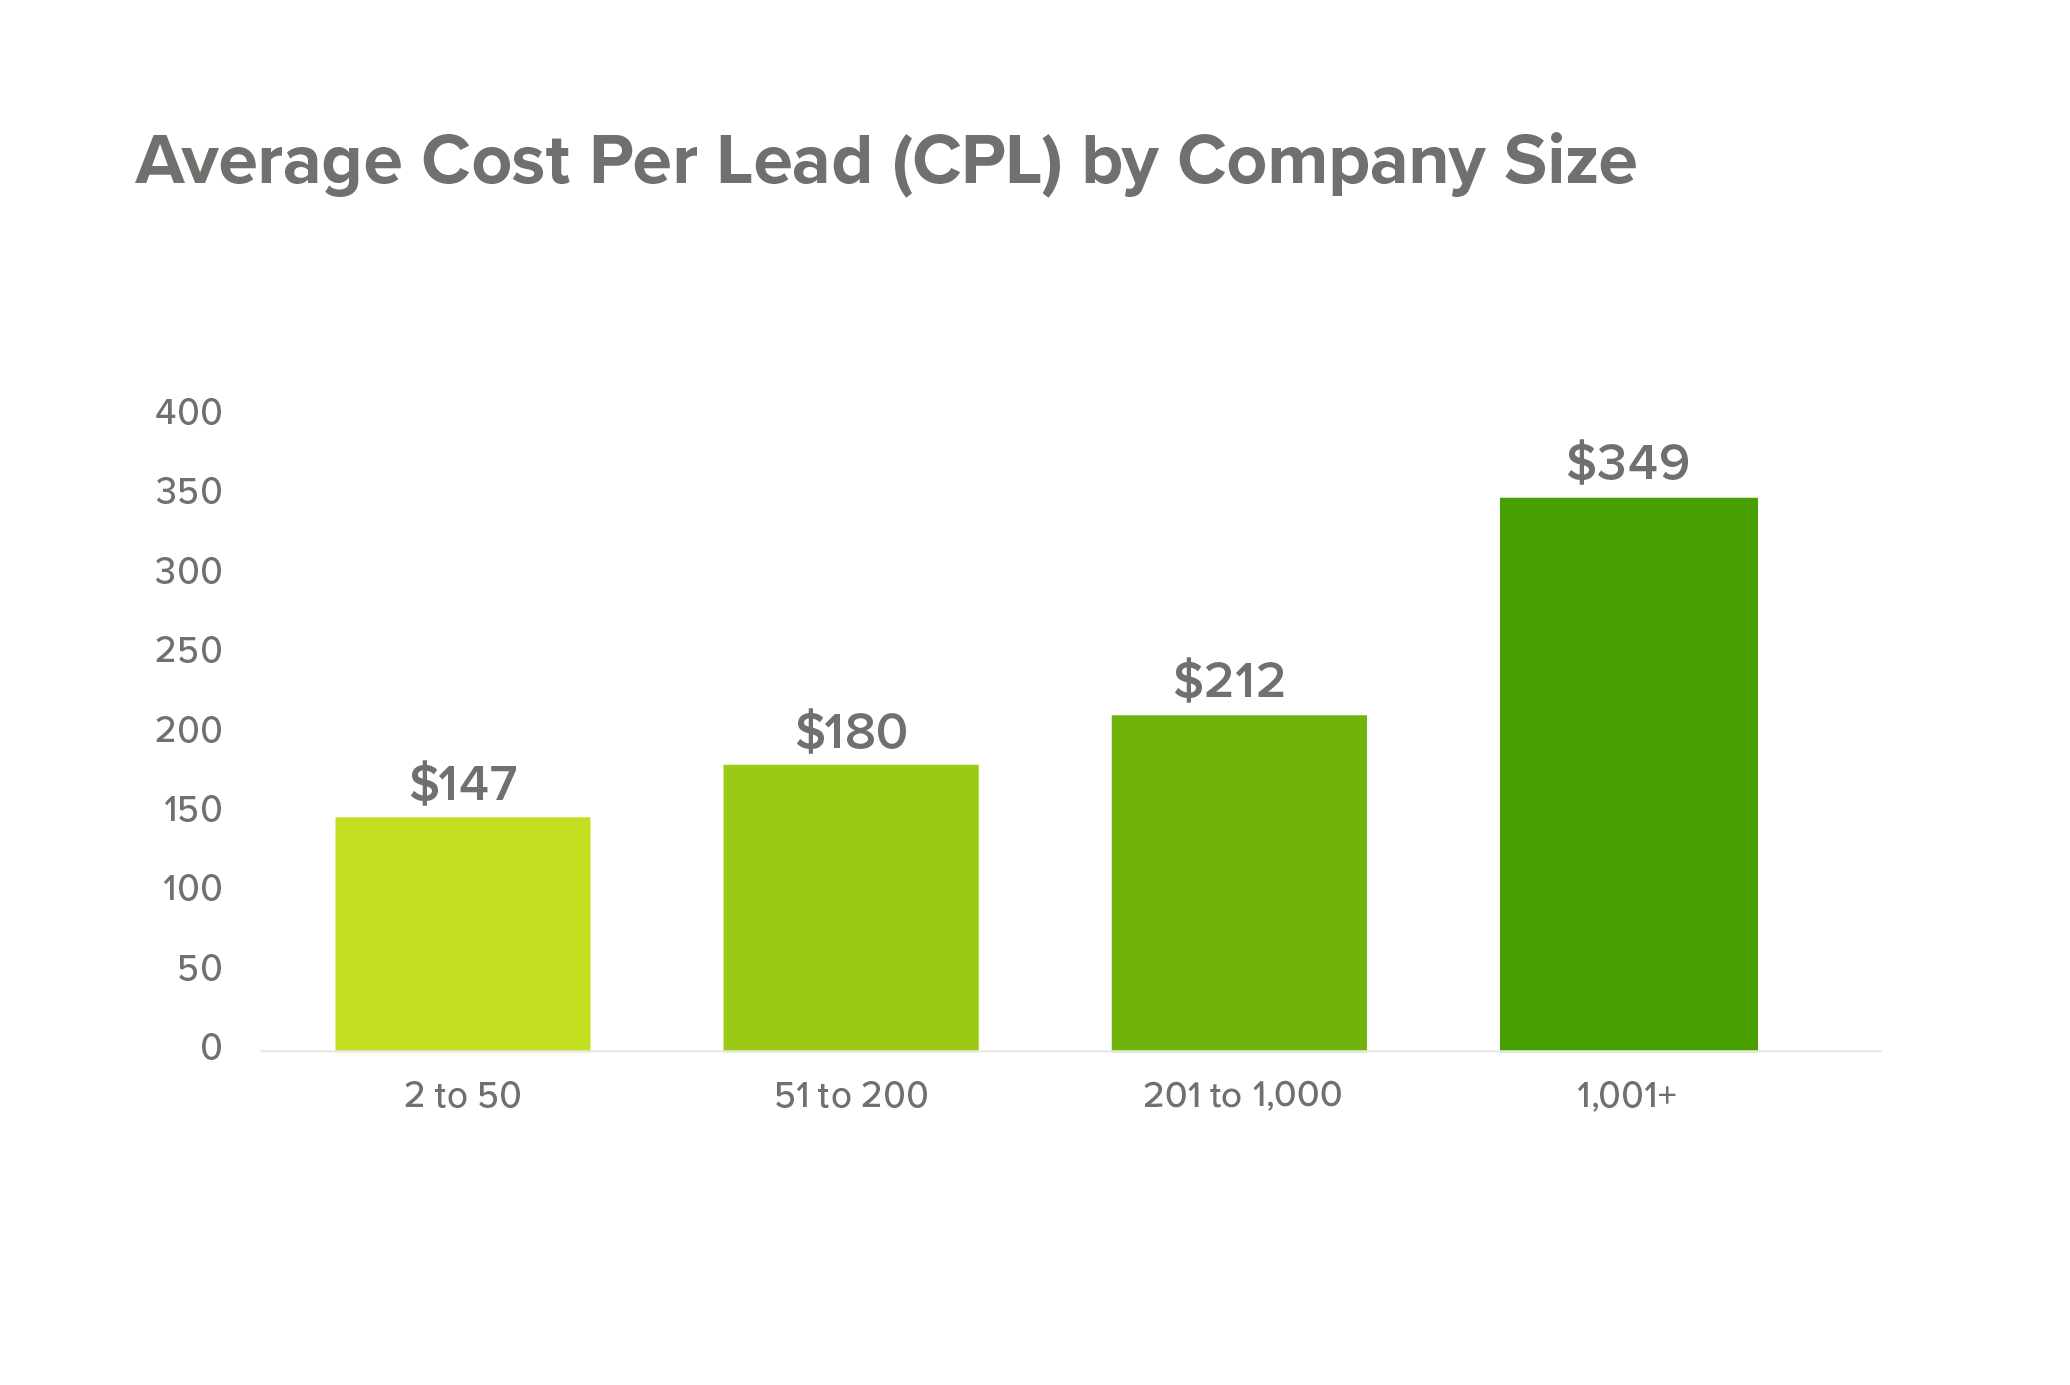 Average cost per lead by company size